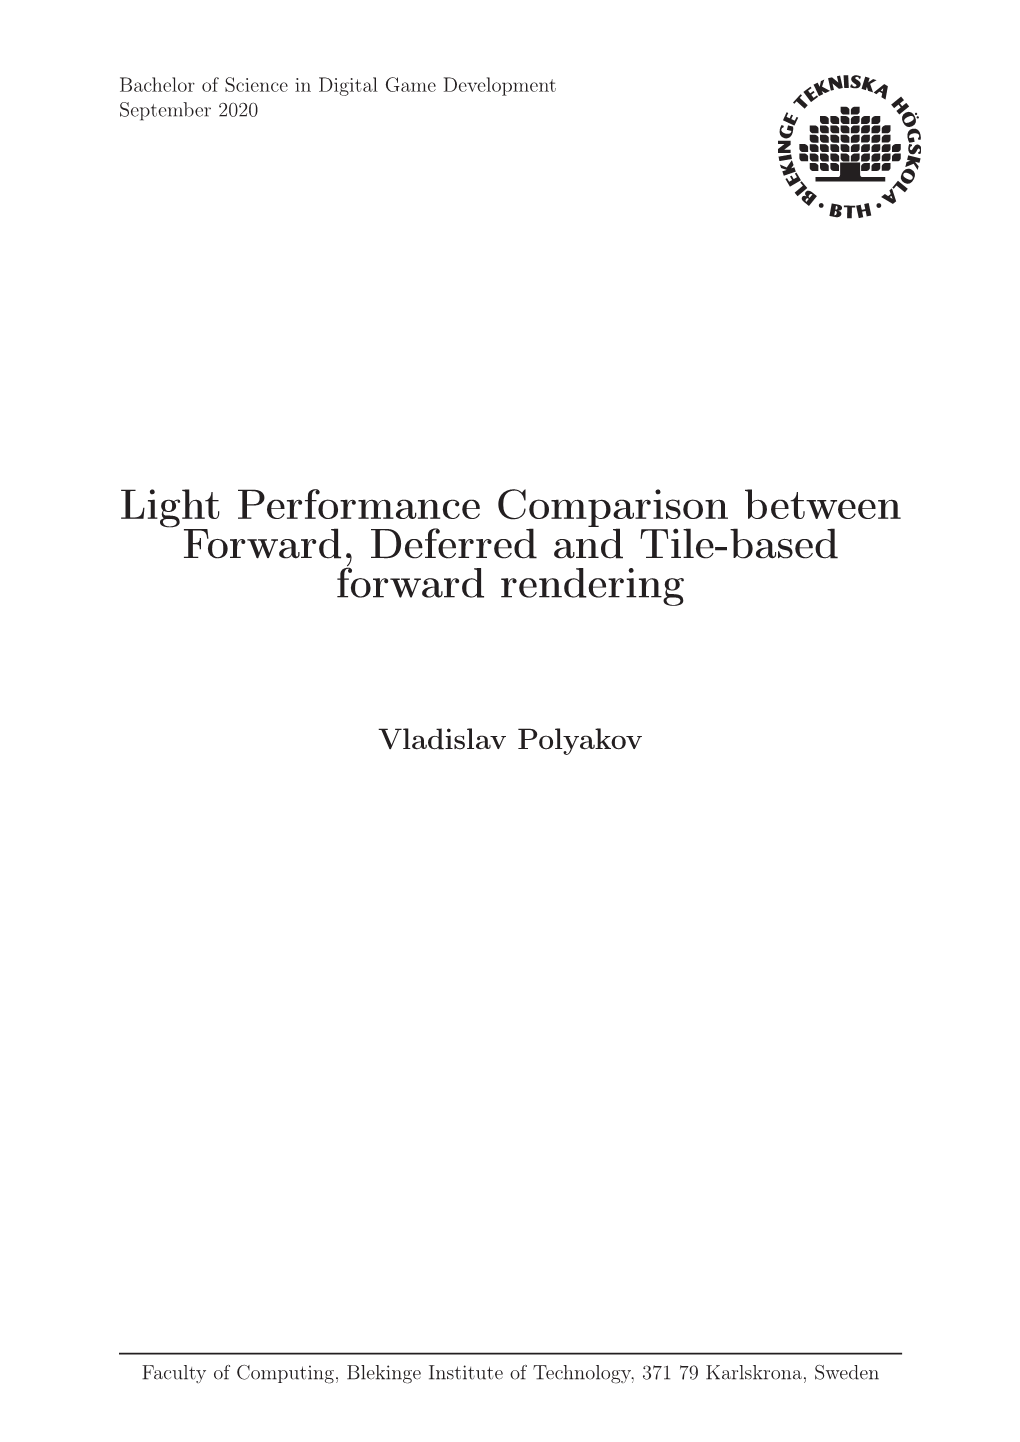 Light Performance Comparison Between Forward, Deferred and Tile-Based Forward Rendering